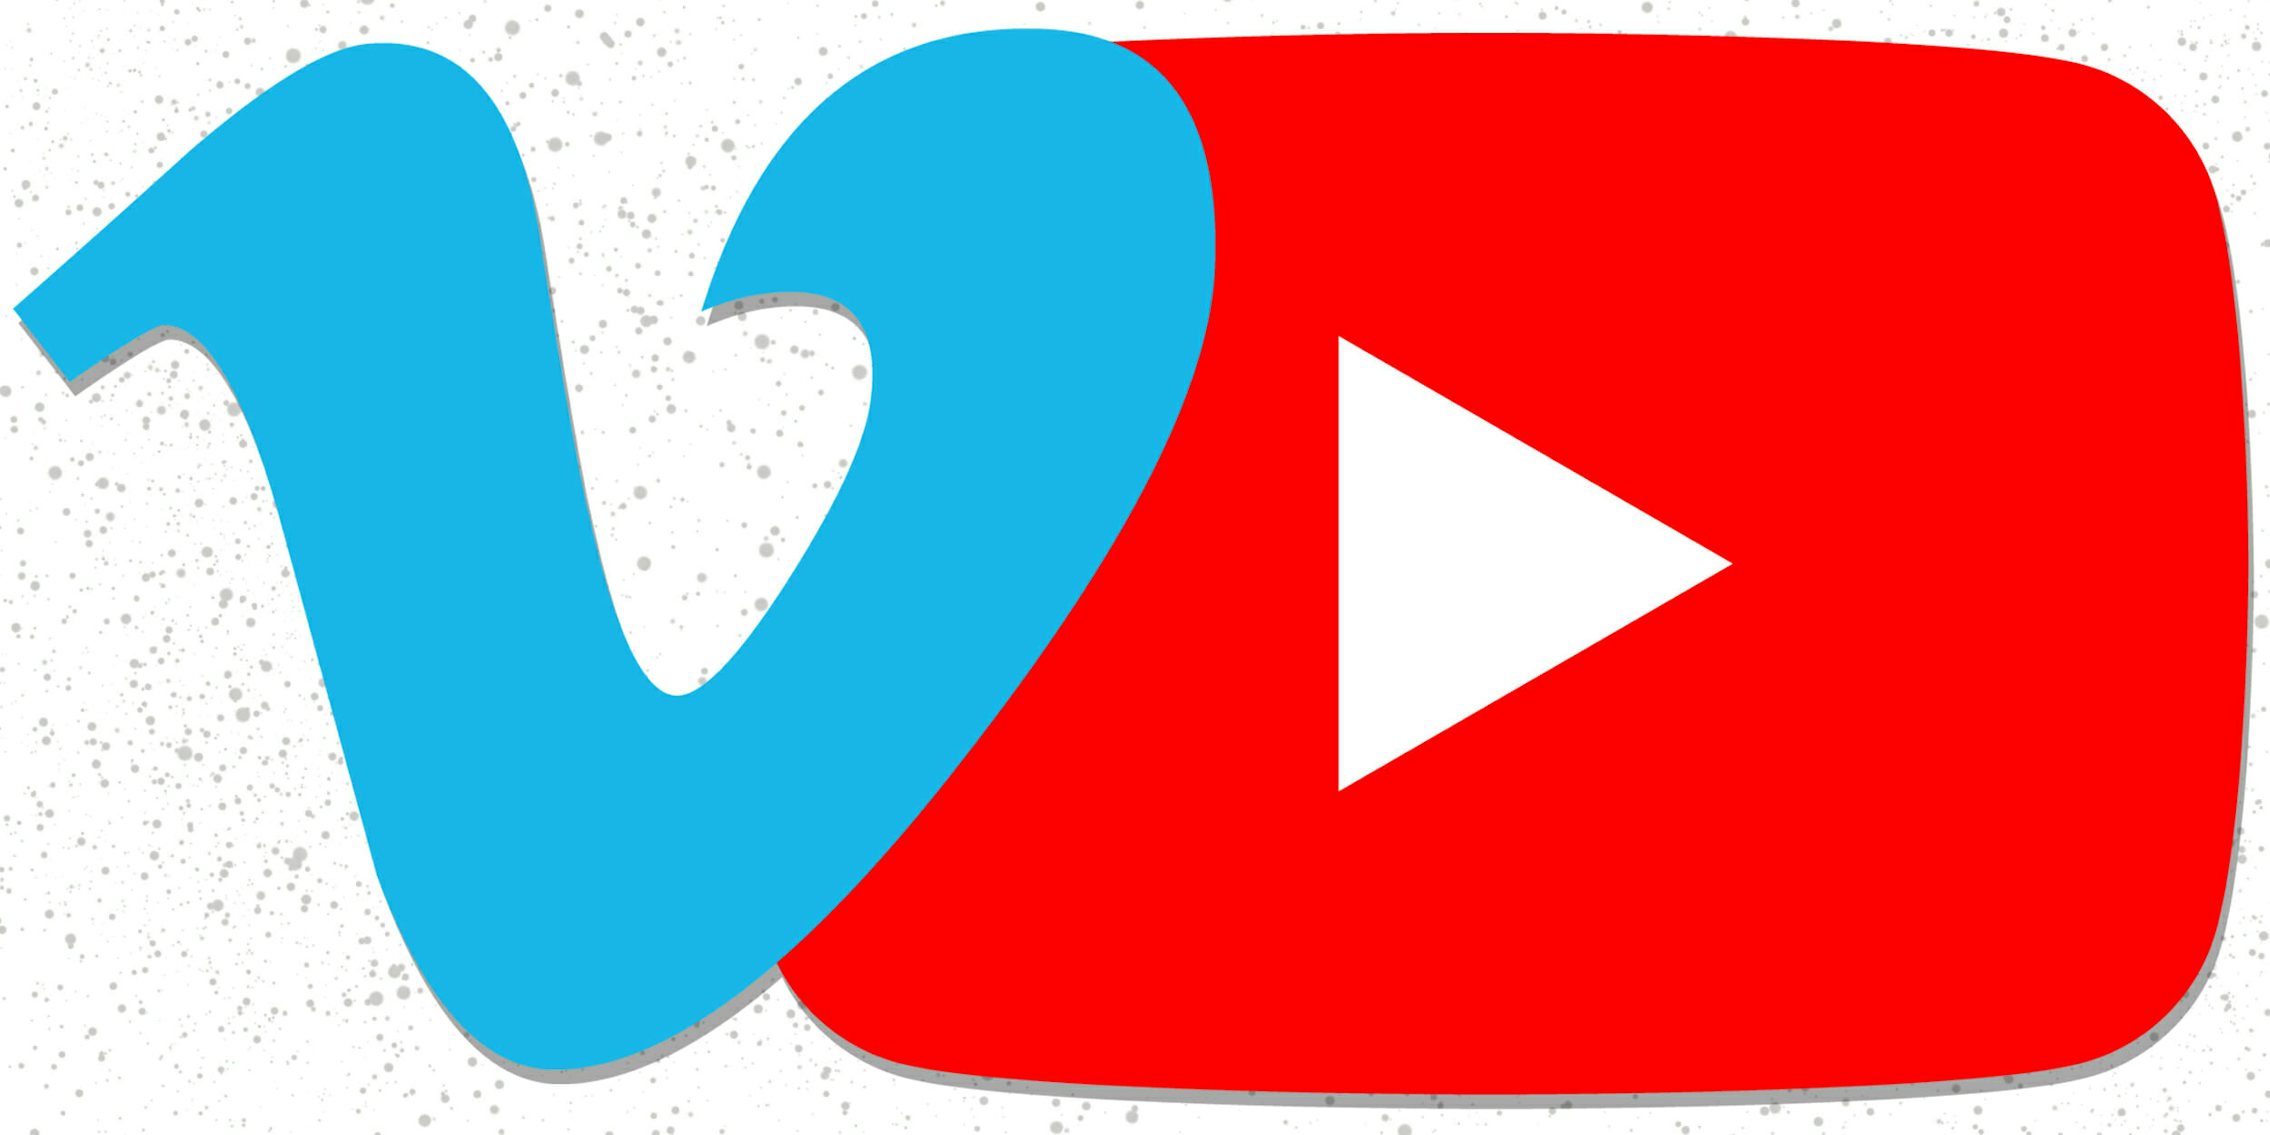 youtube vs vimeo